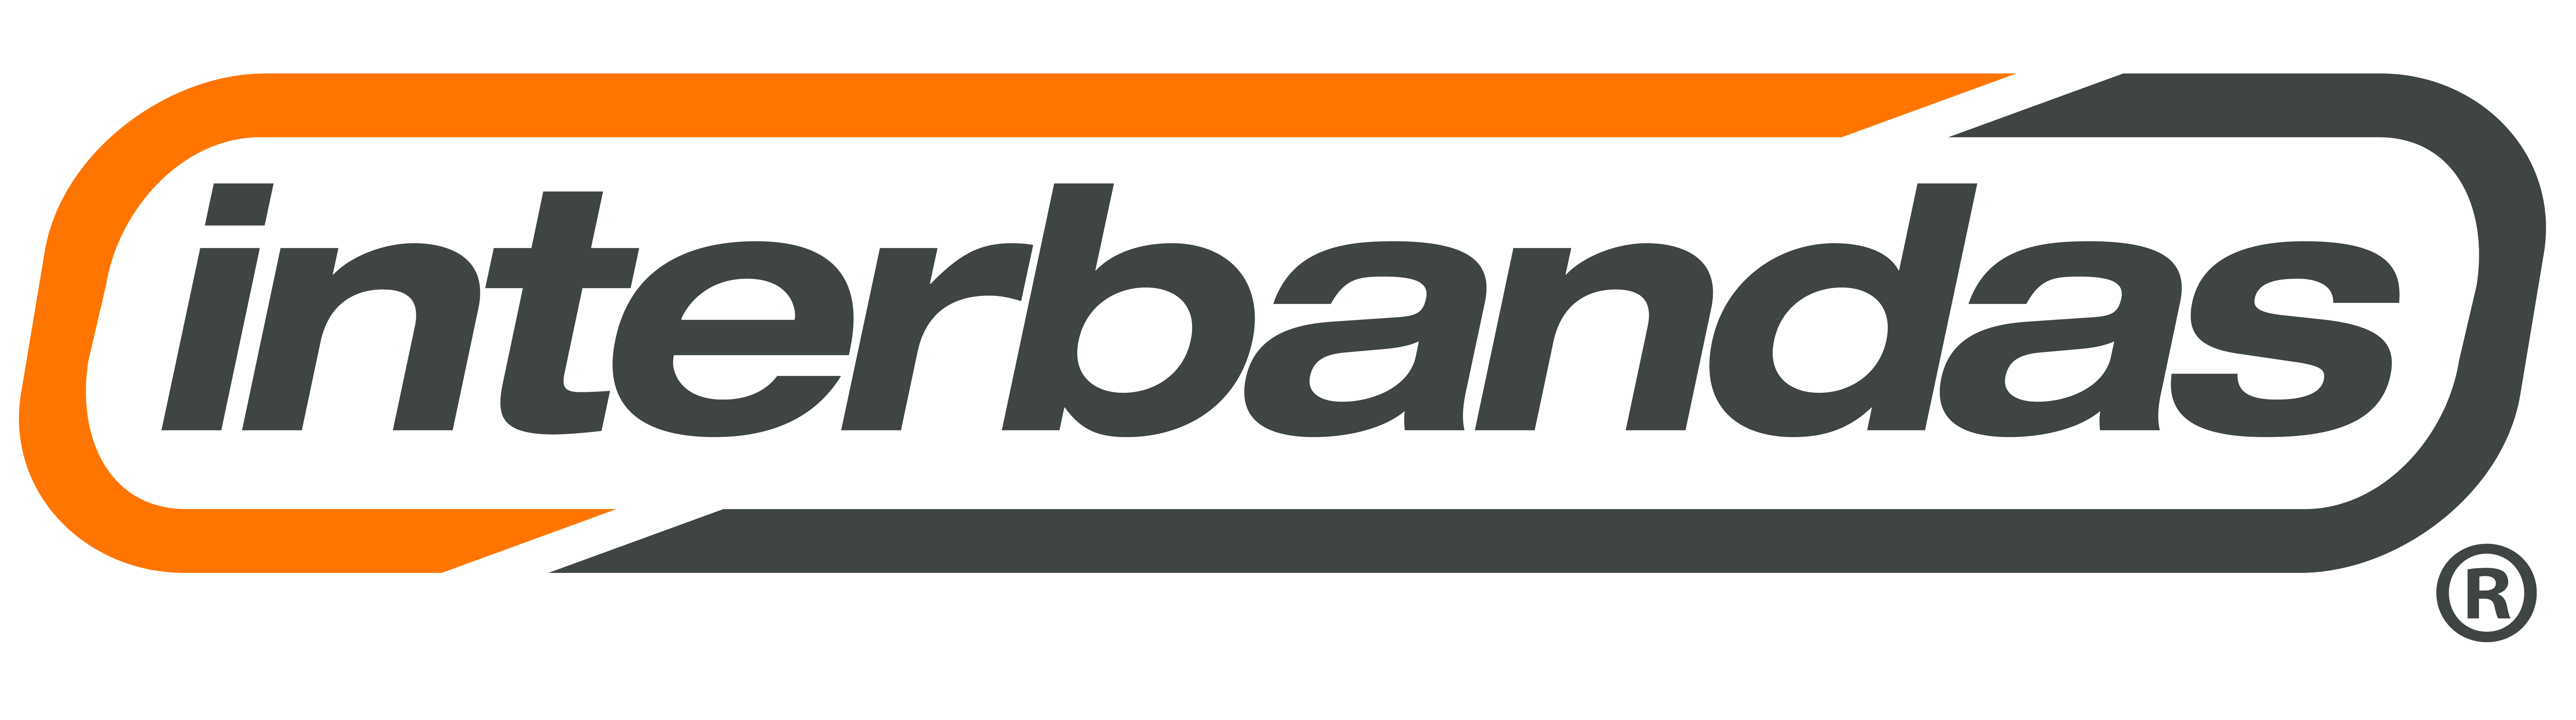 Interbandas logo